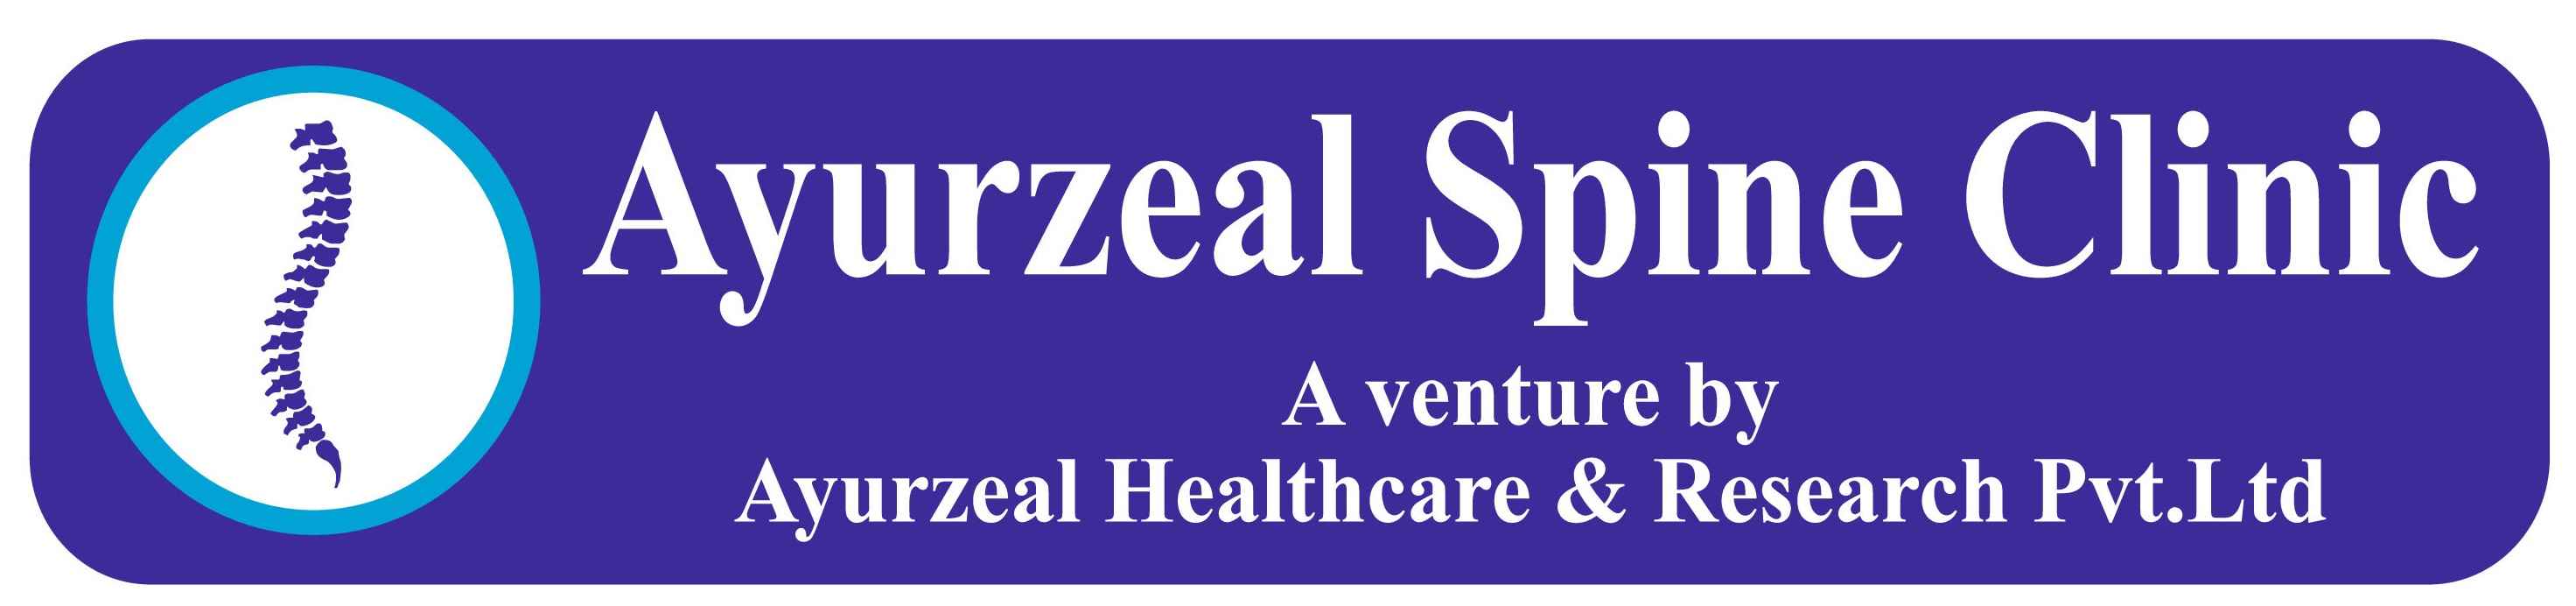 Ayurzeal Spine Clinics